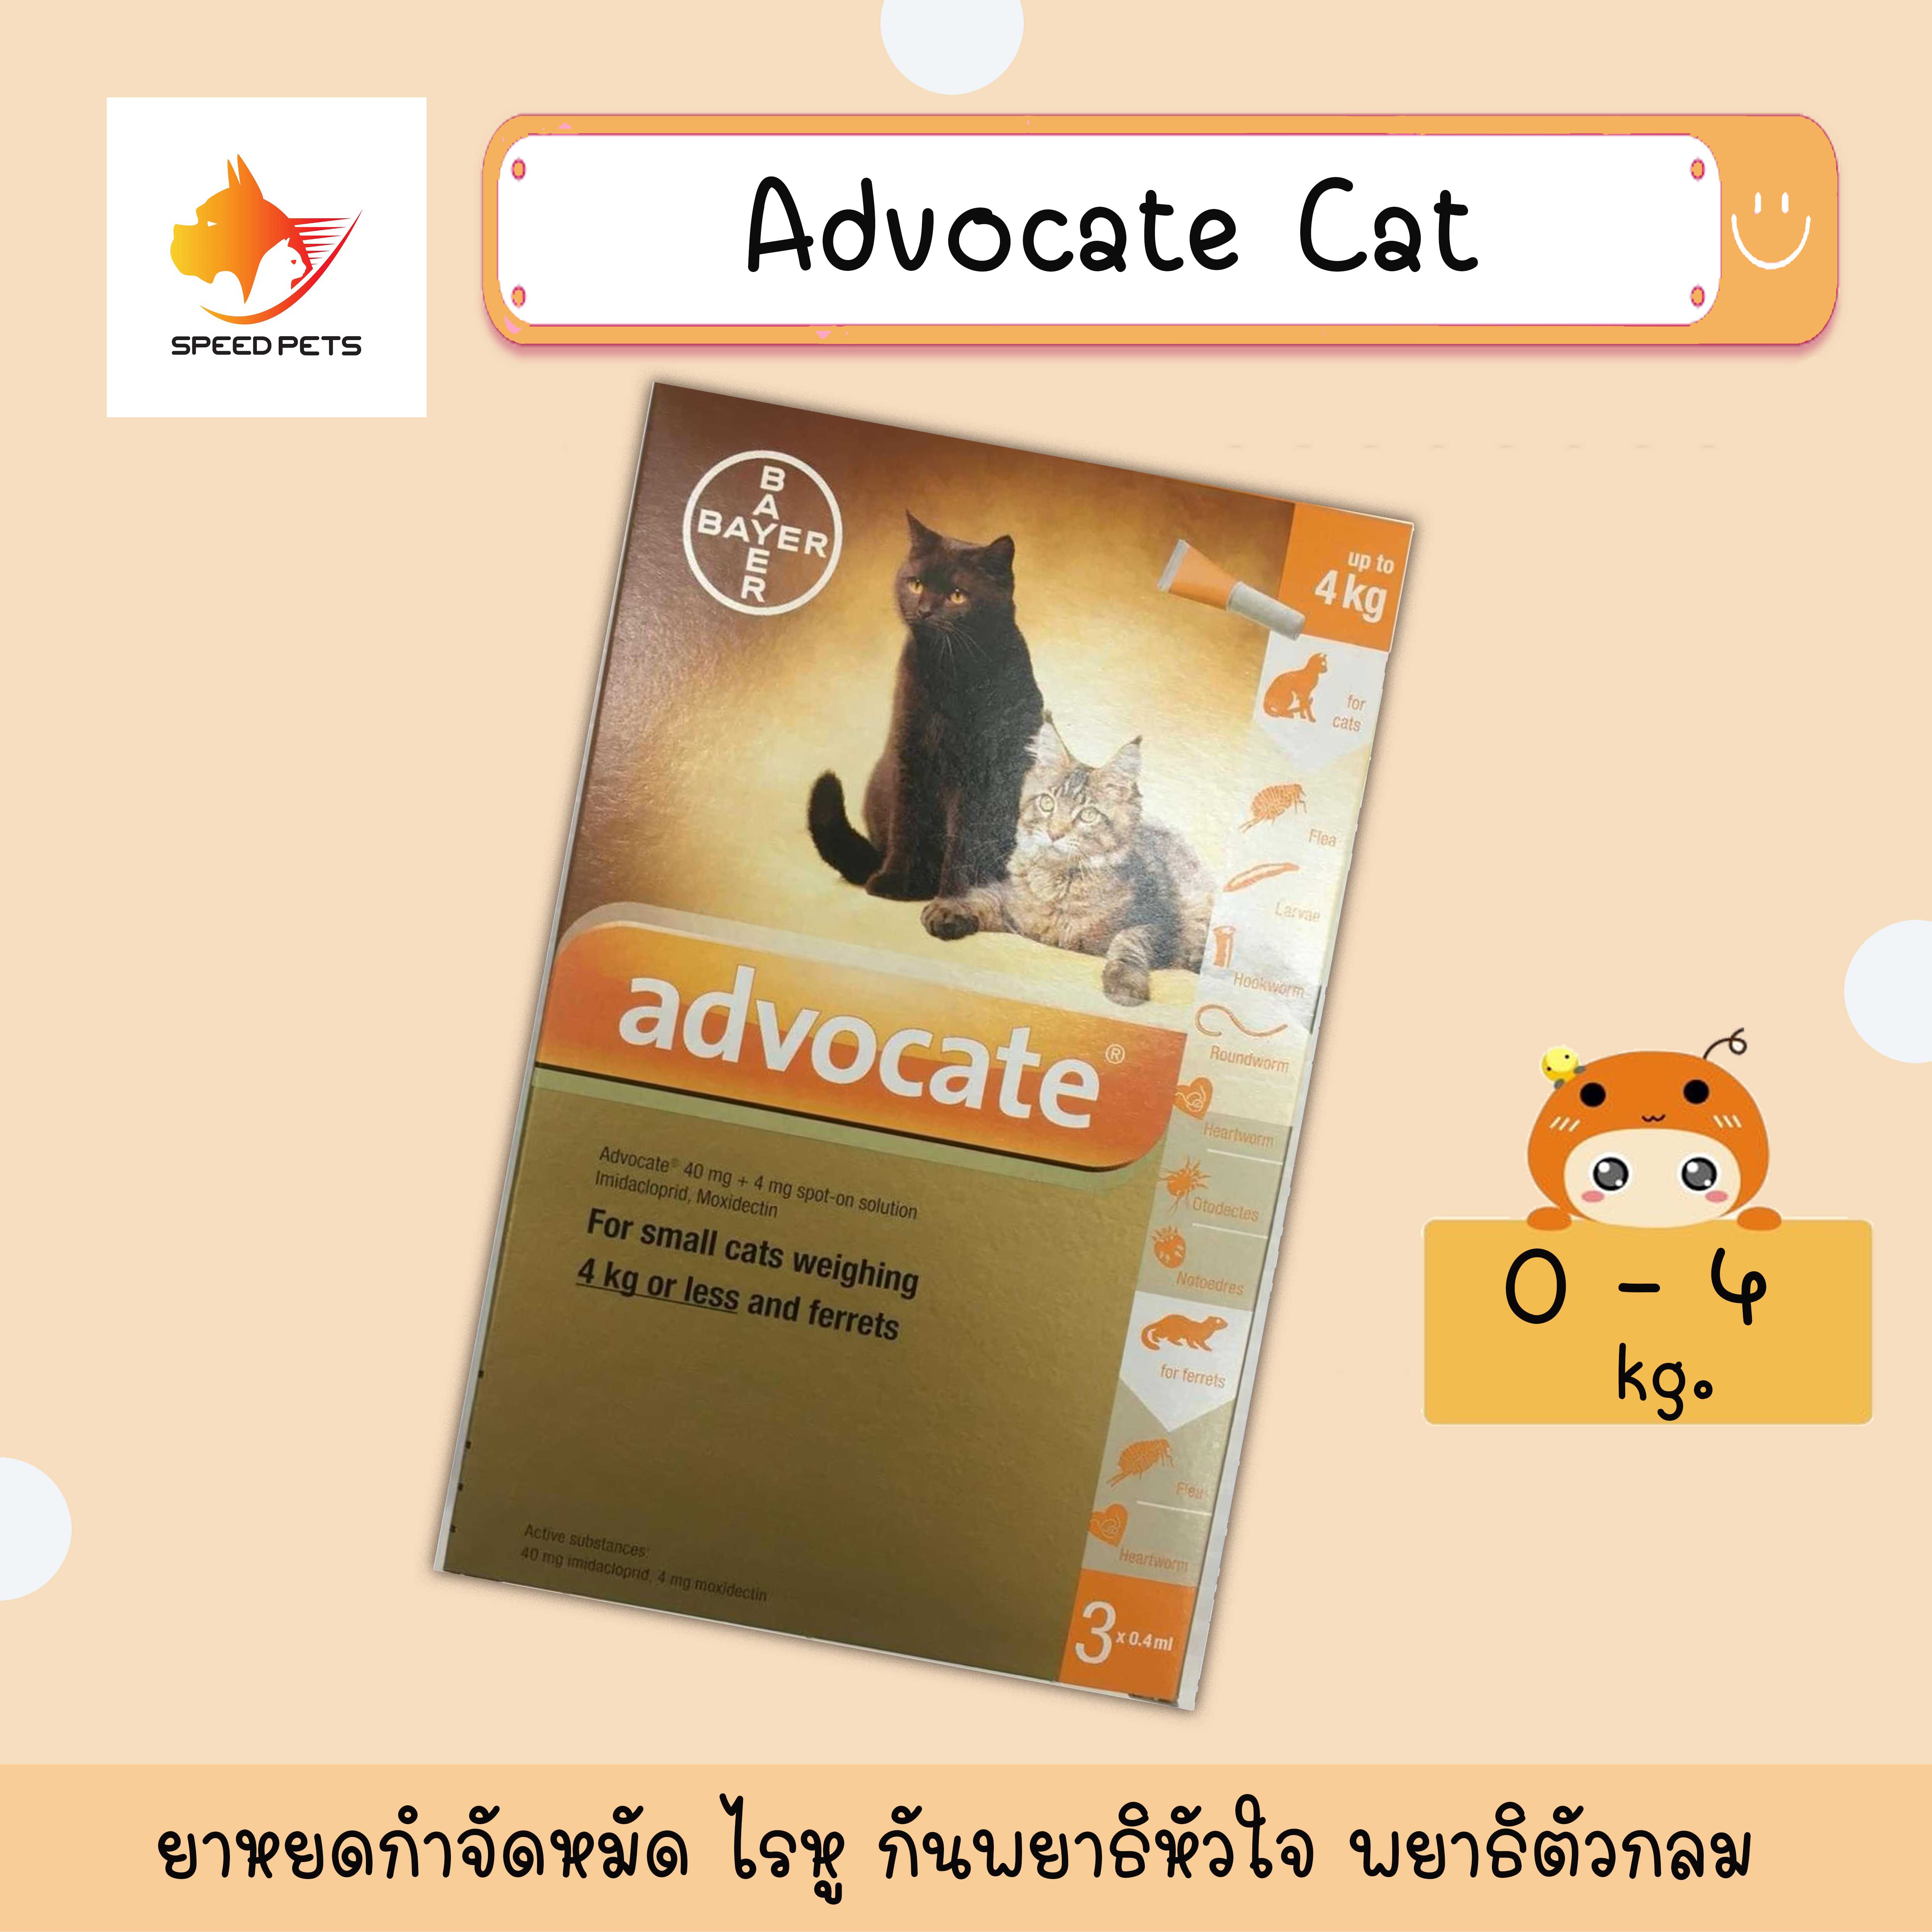 Advocate cat 0-4 kg สีส้ม แอทโวเคท แมว น้ำหนัก 4 กก. 1 กล่อง 3 หลอด